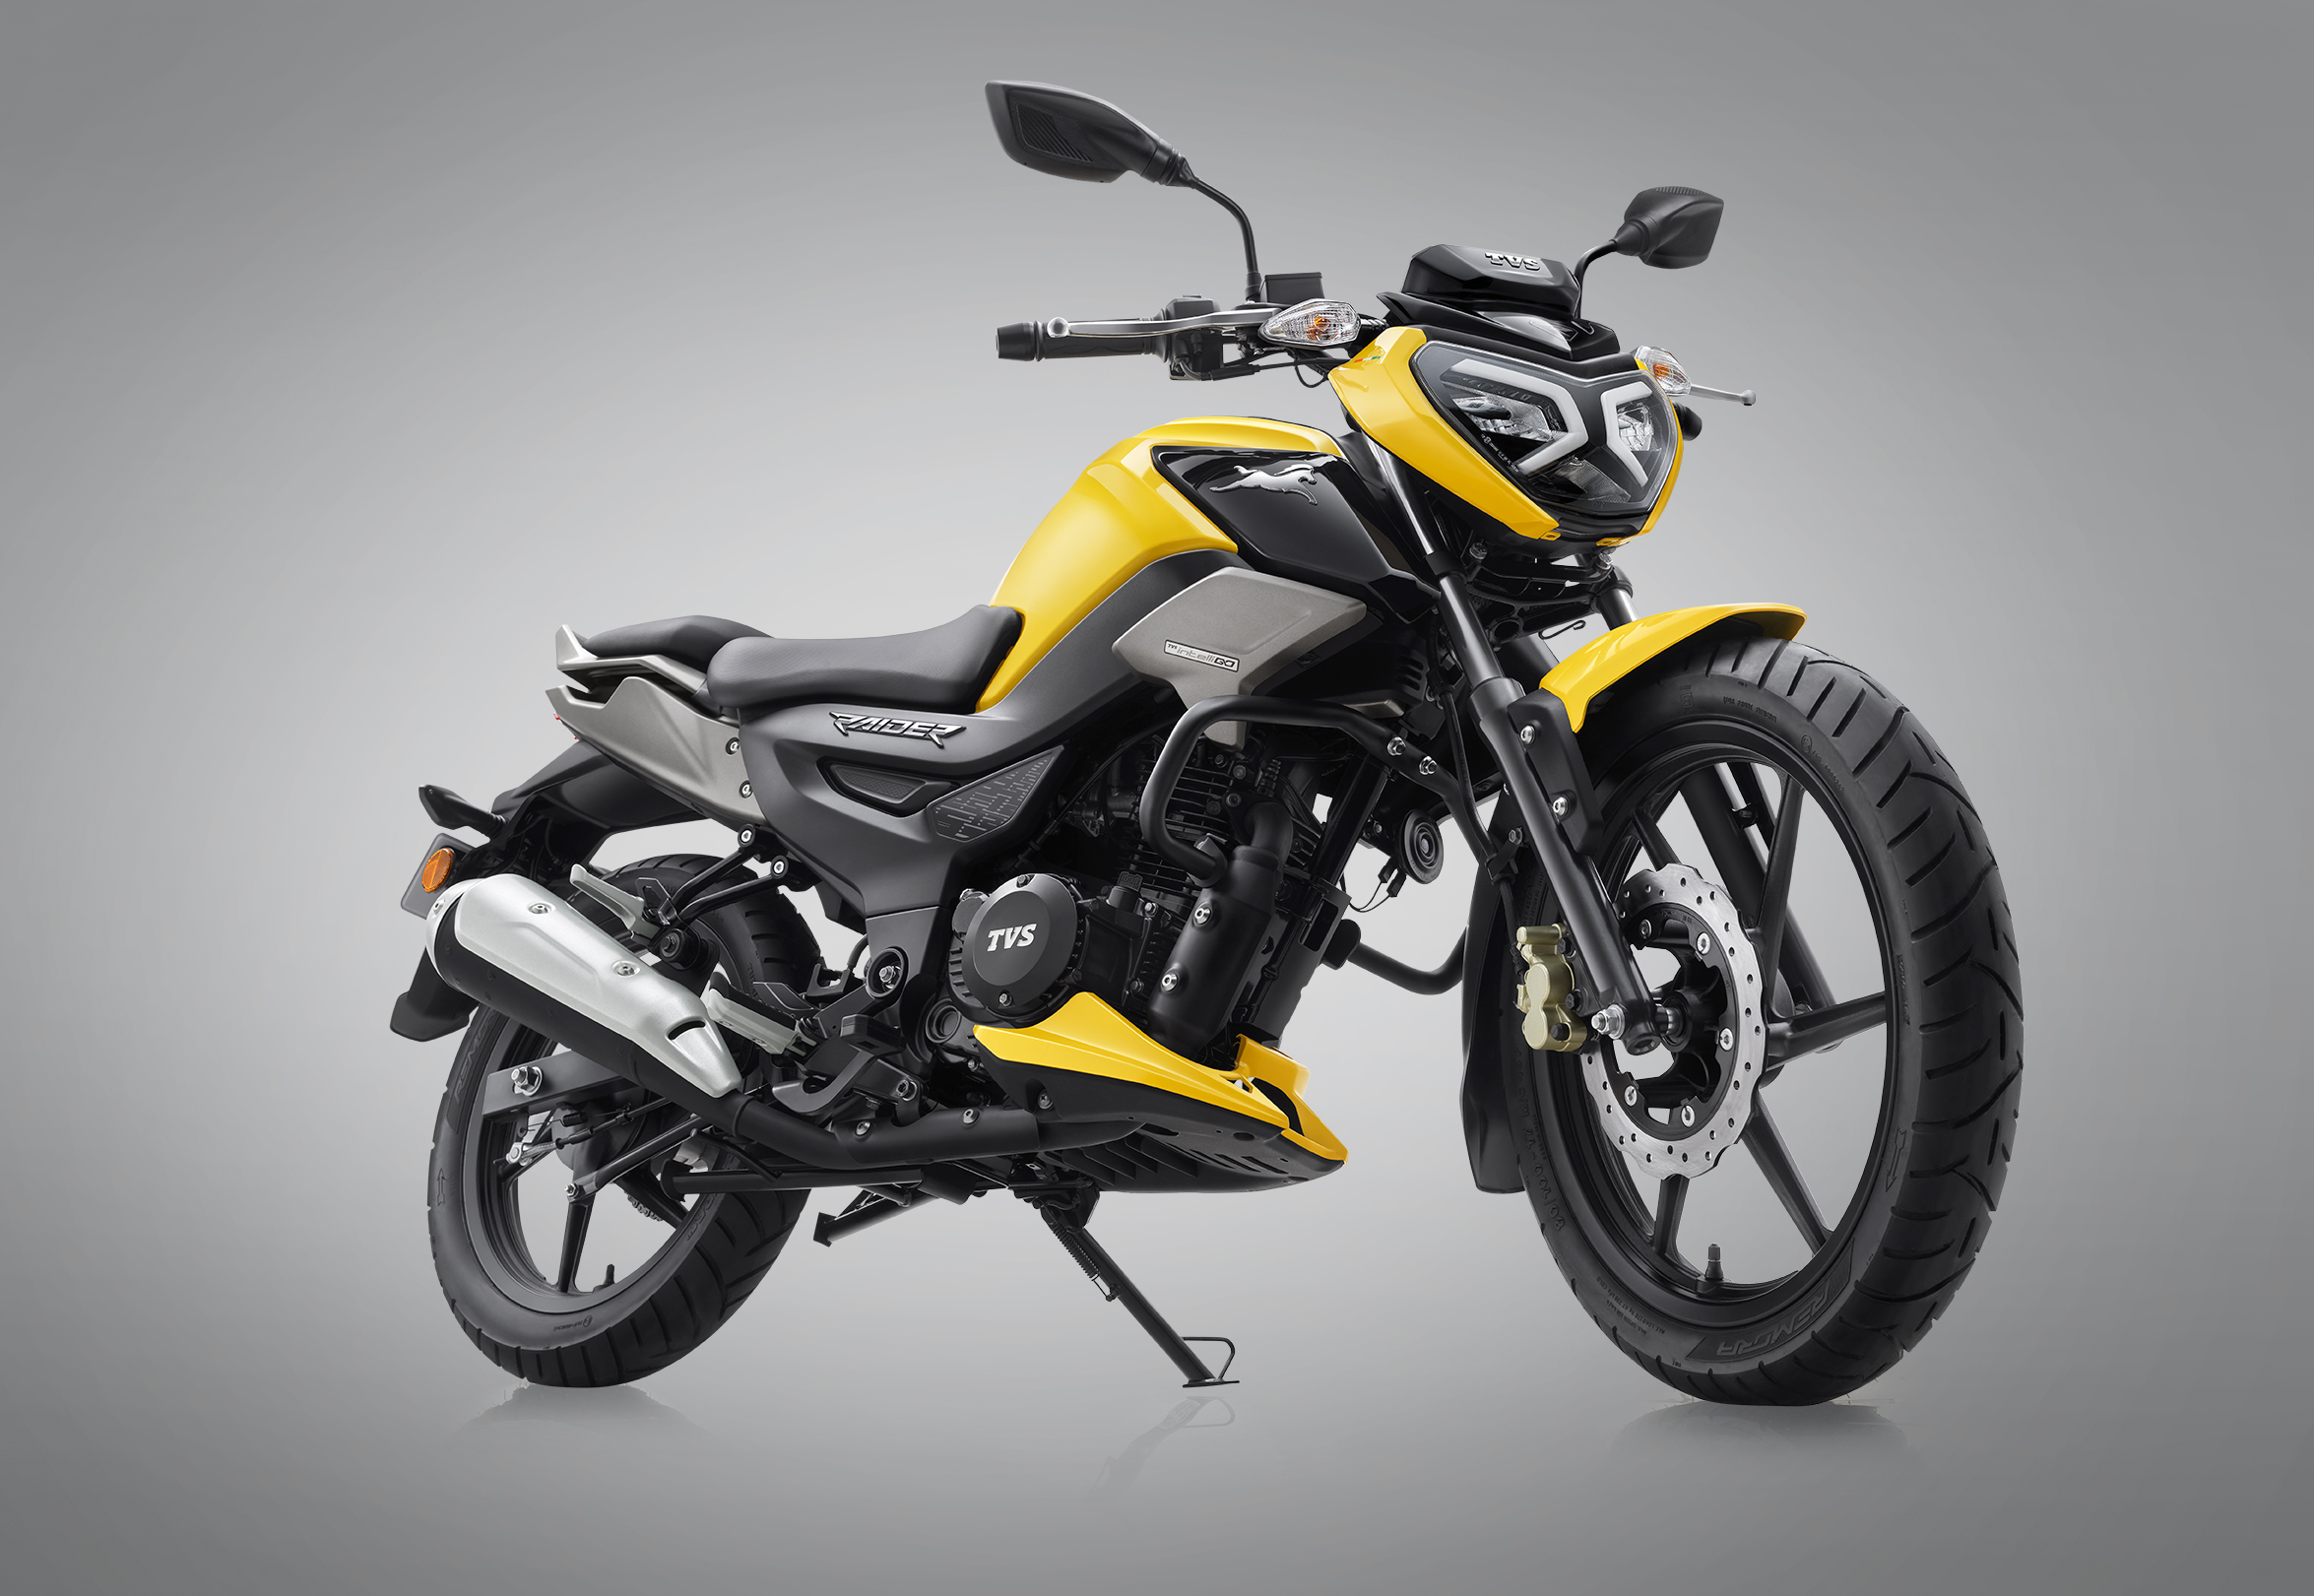 TVS Motor Company launchesNaked Street Design ‘TVS Raider’motorcycle globally for theGenZ decoding=